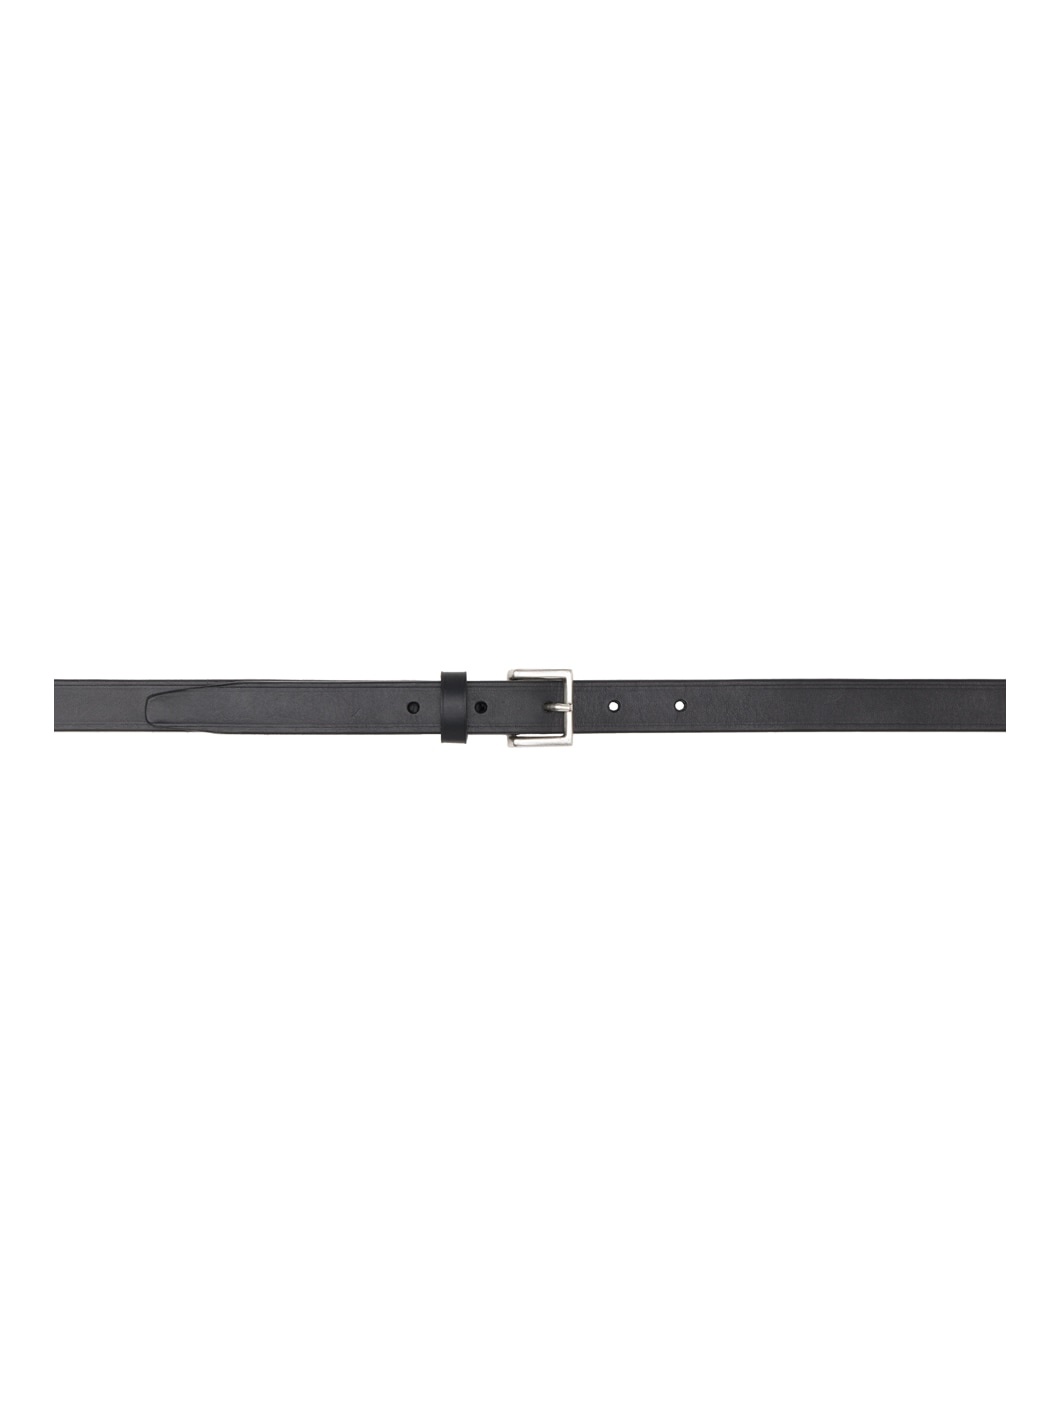 Black Pin-Buckle Belt - 1